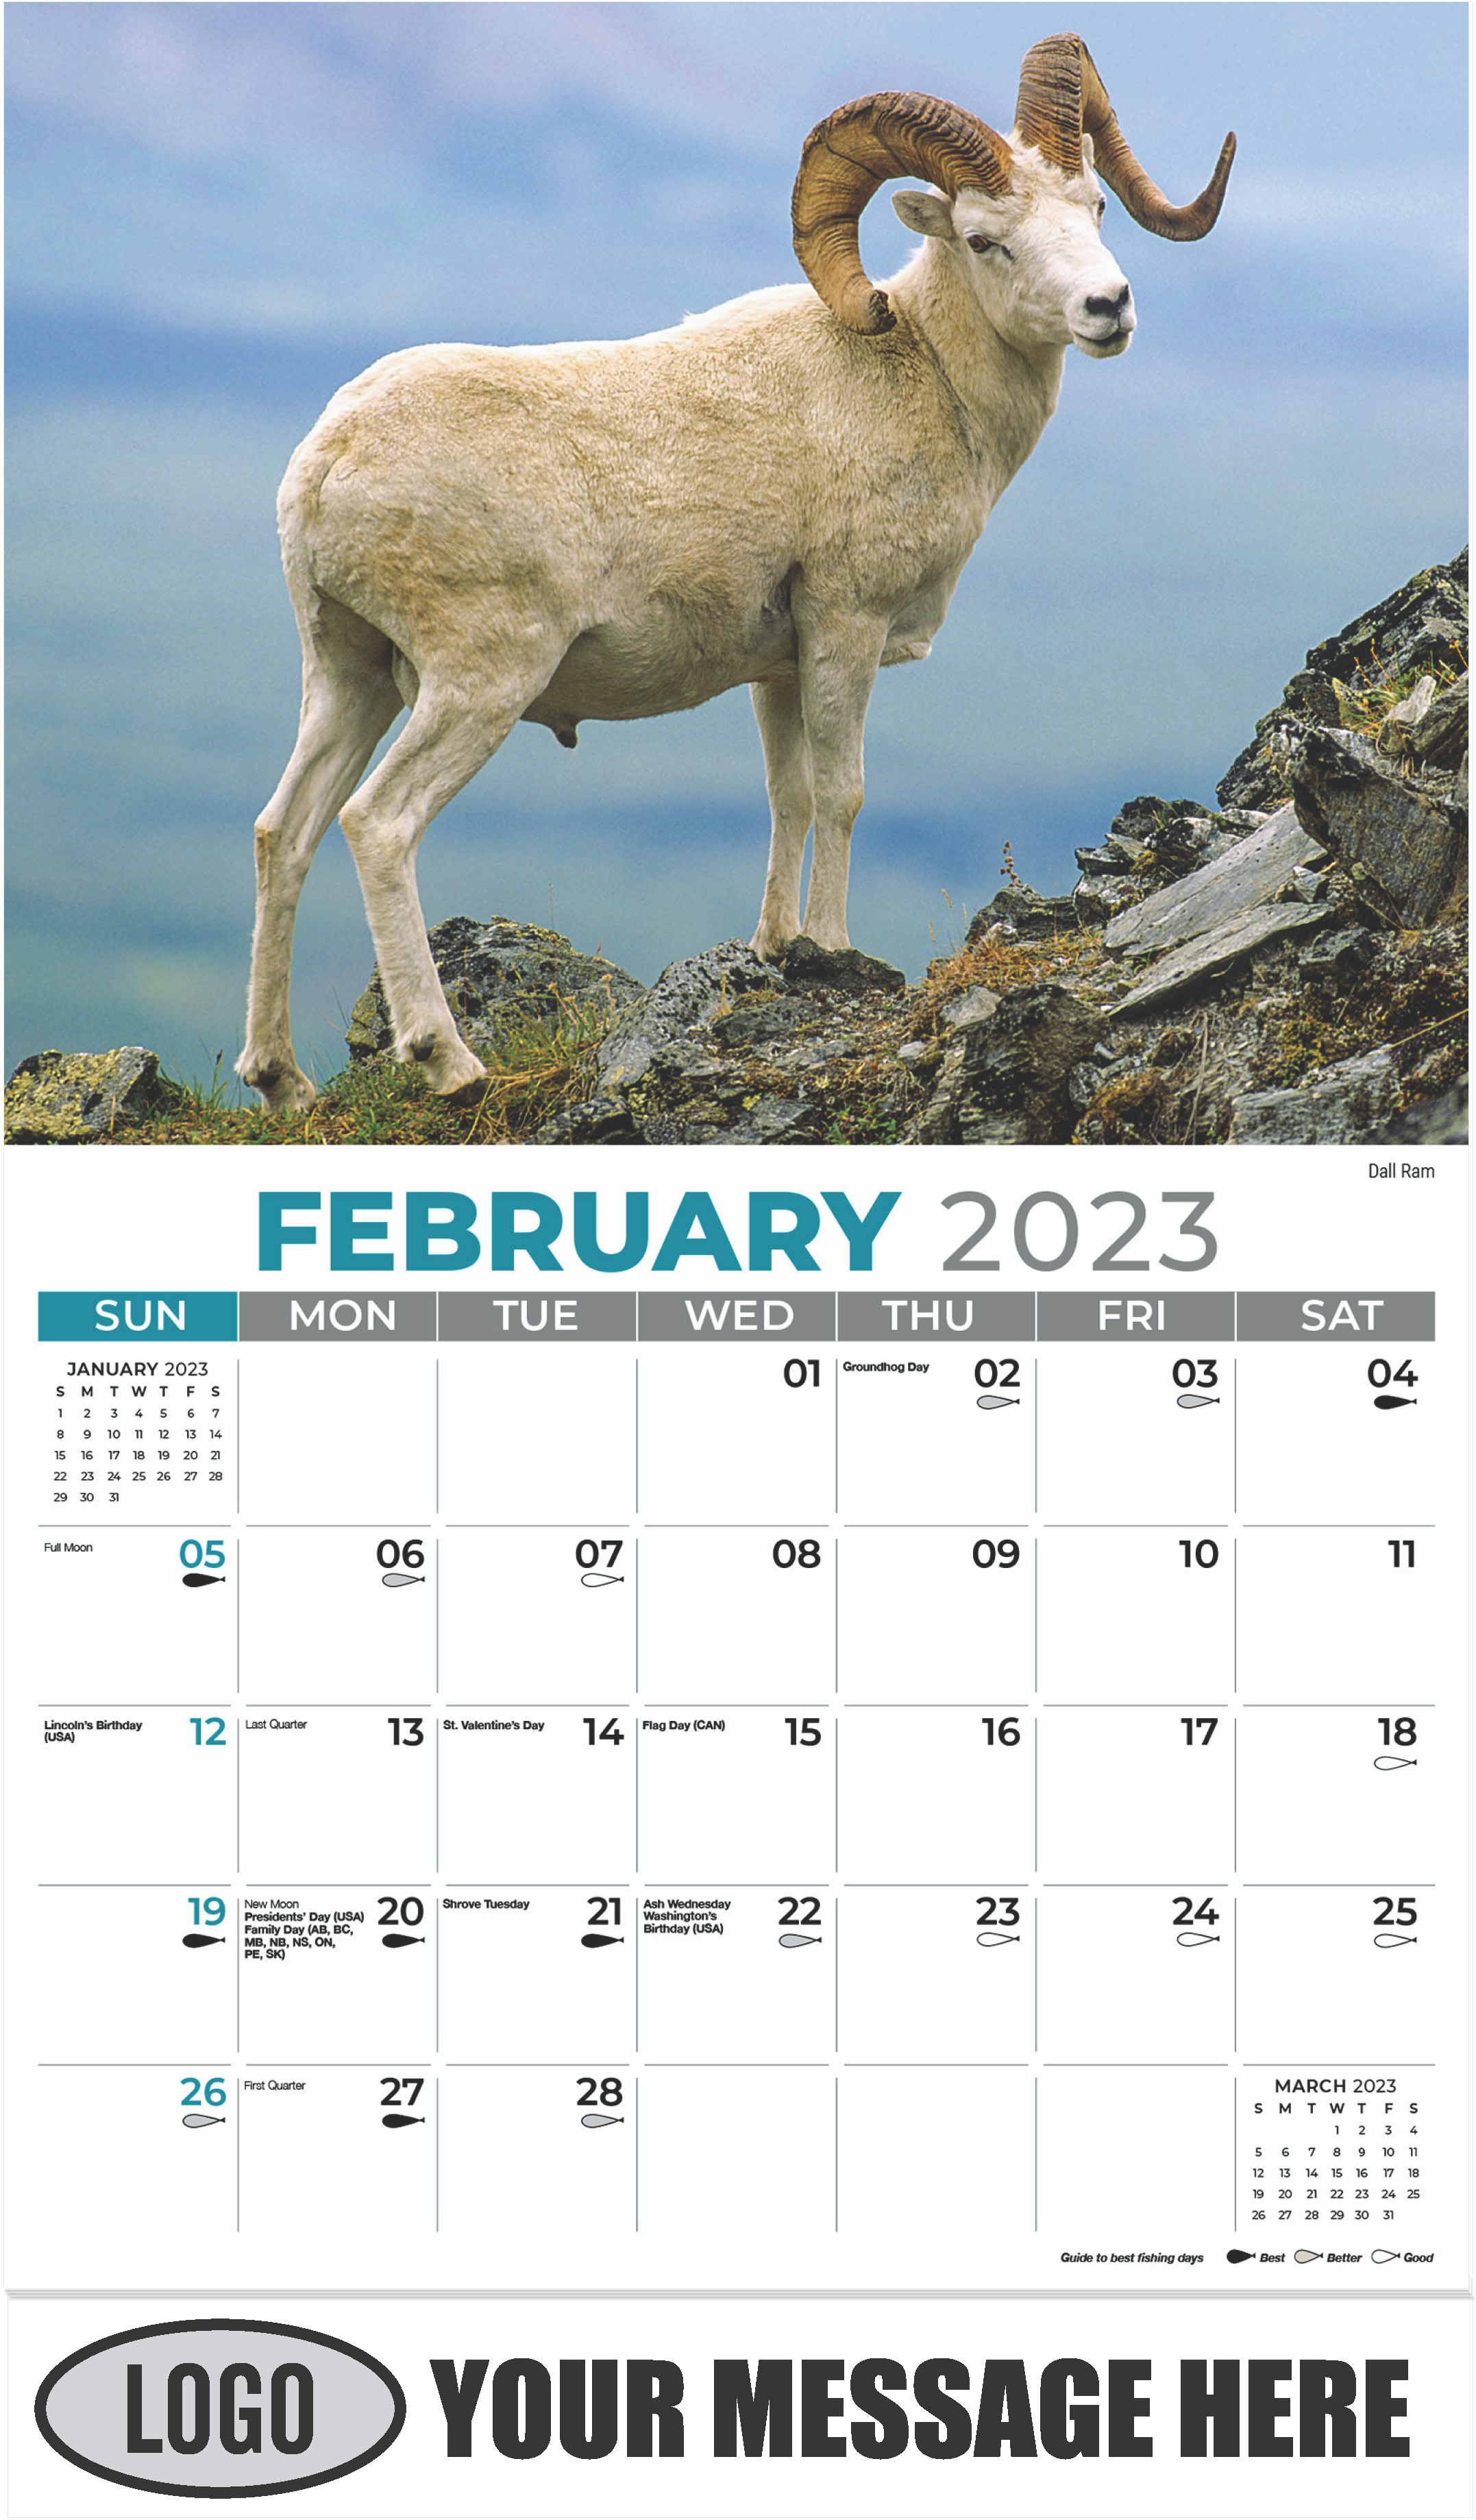 Dall Ram - February - North American Wildlife 2023 Promotional Calendar